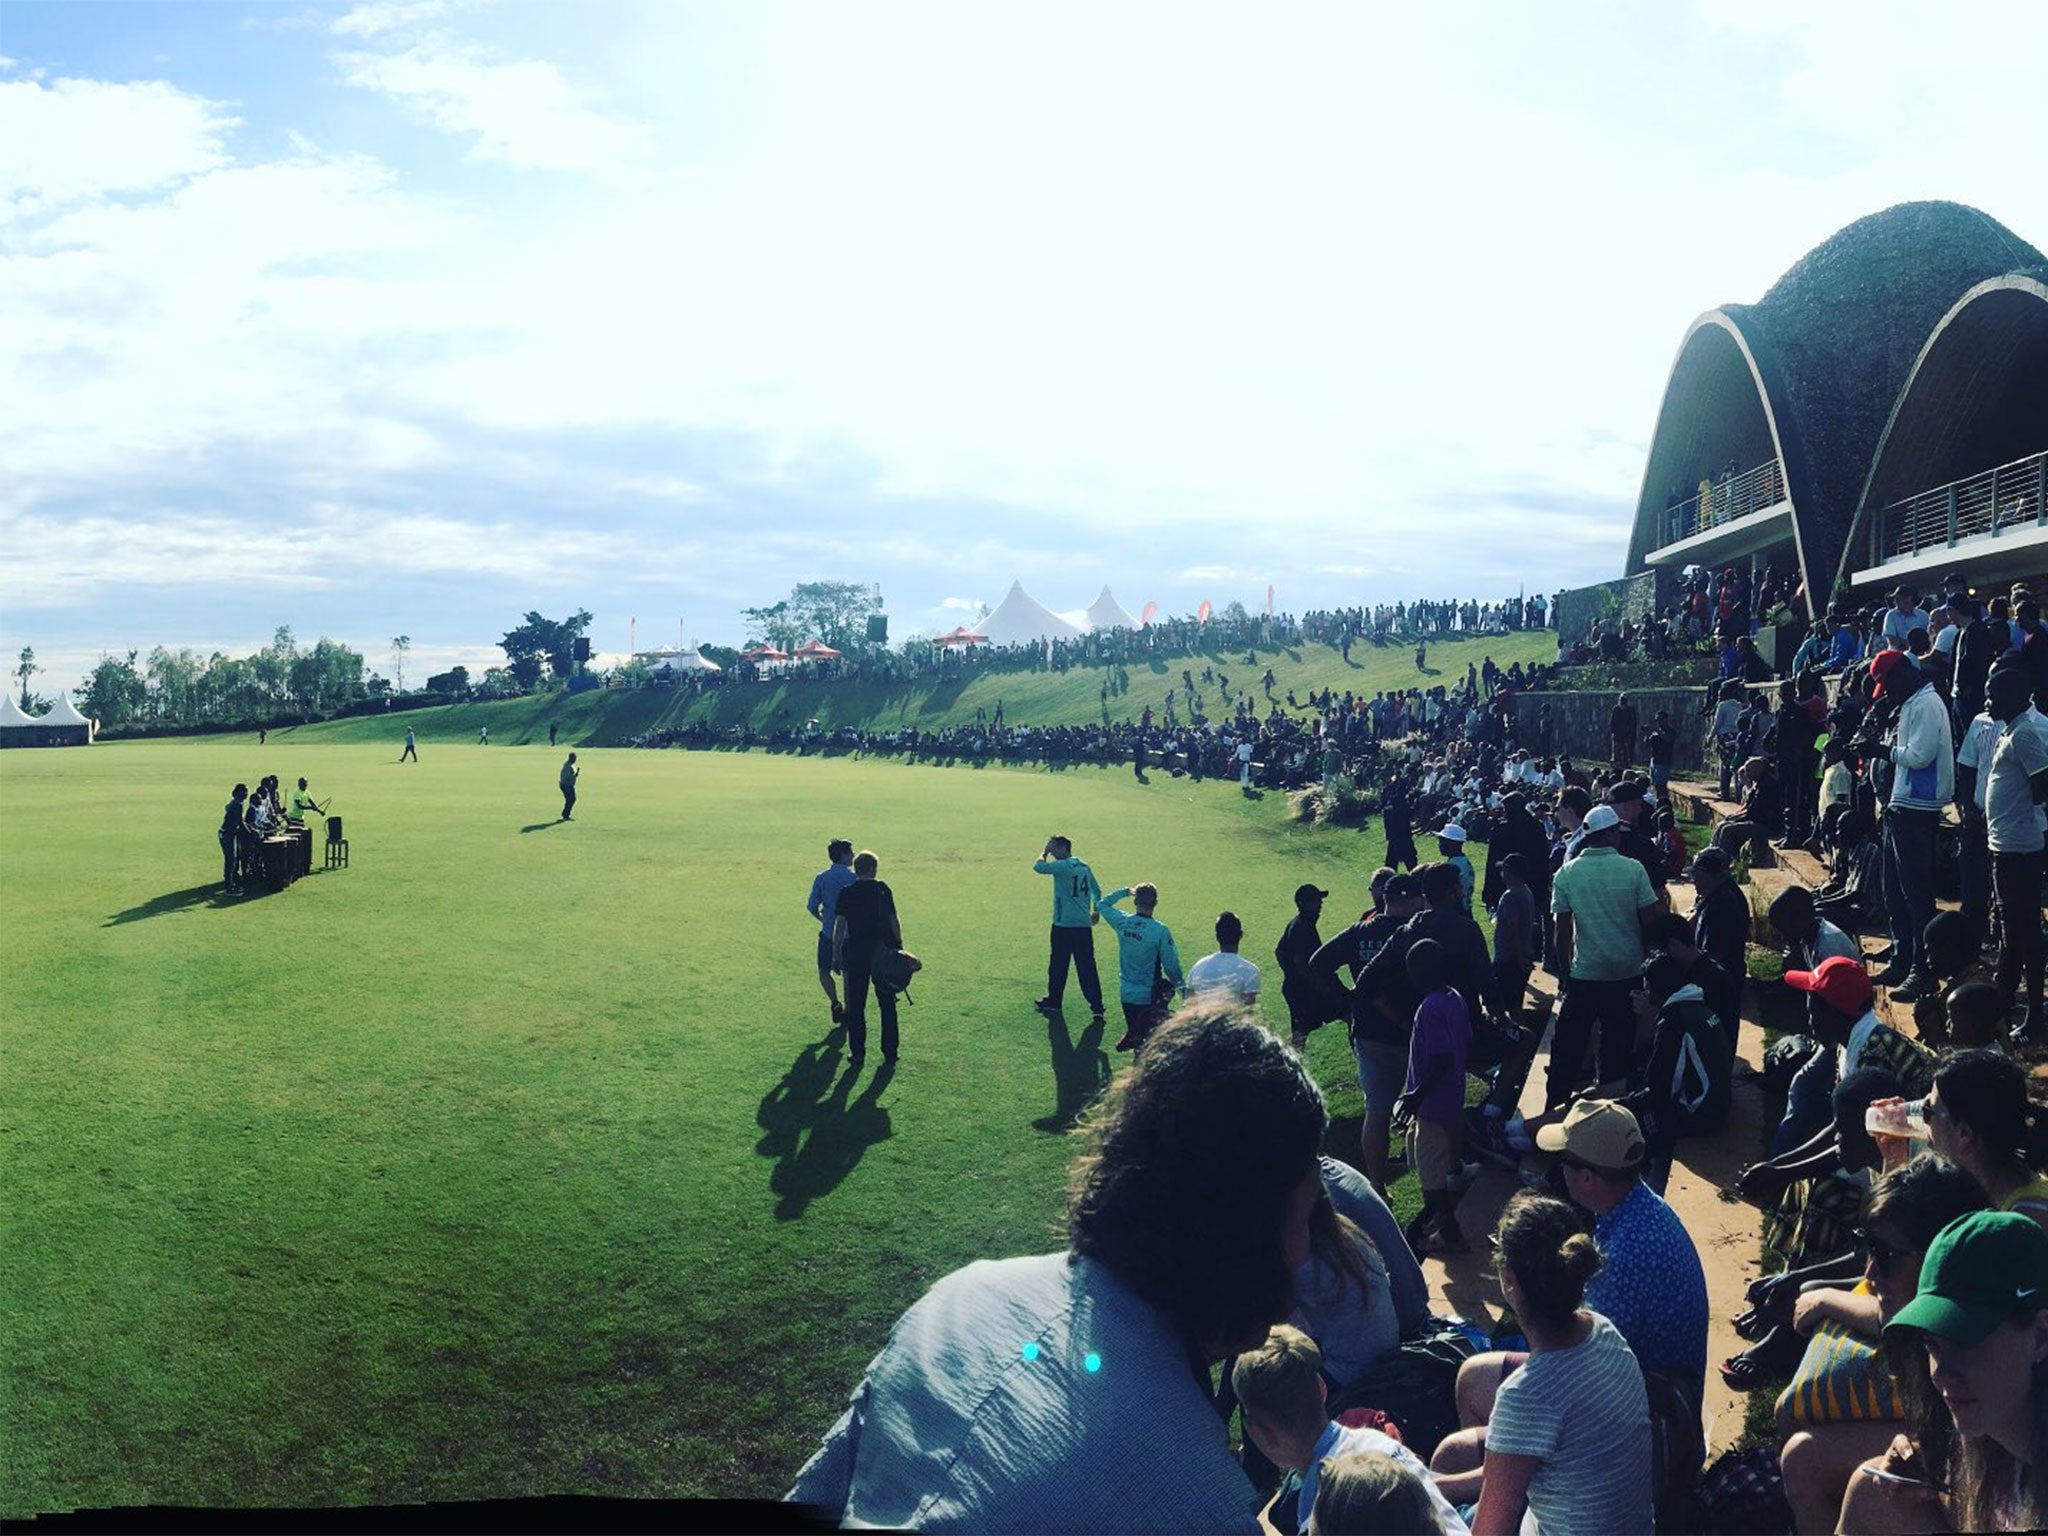 The Gahanga cricket ground on its day of inauguration